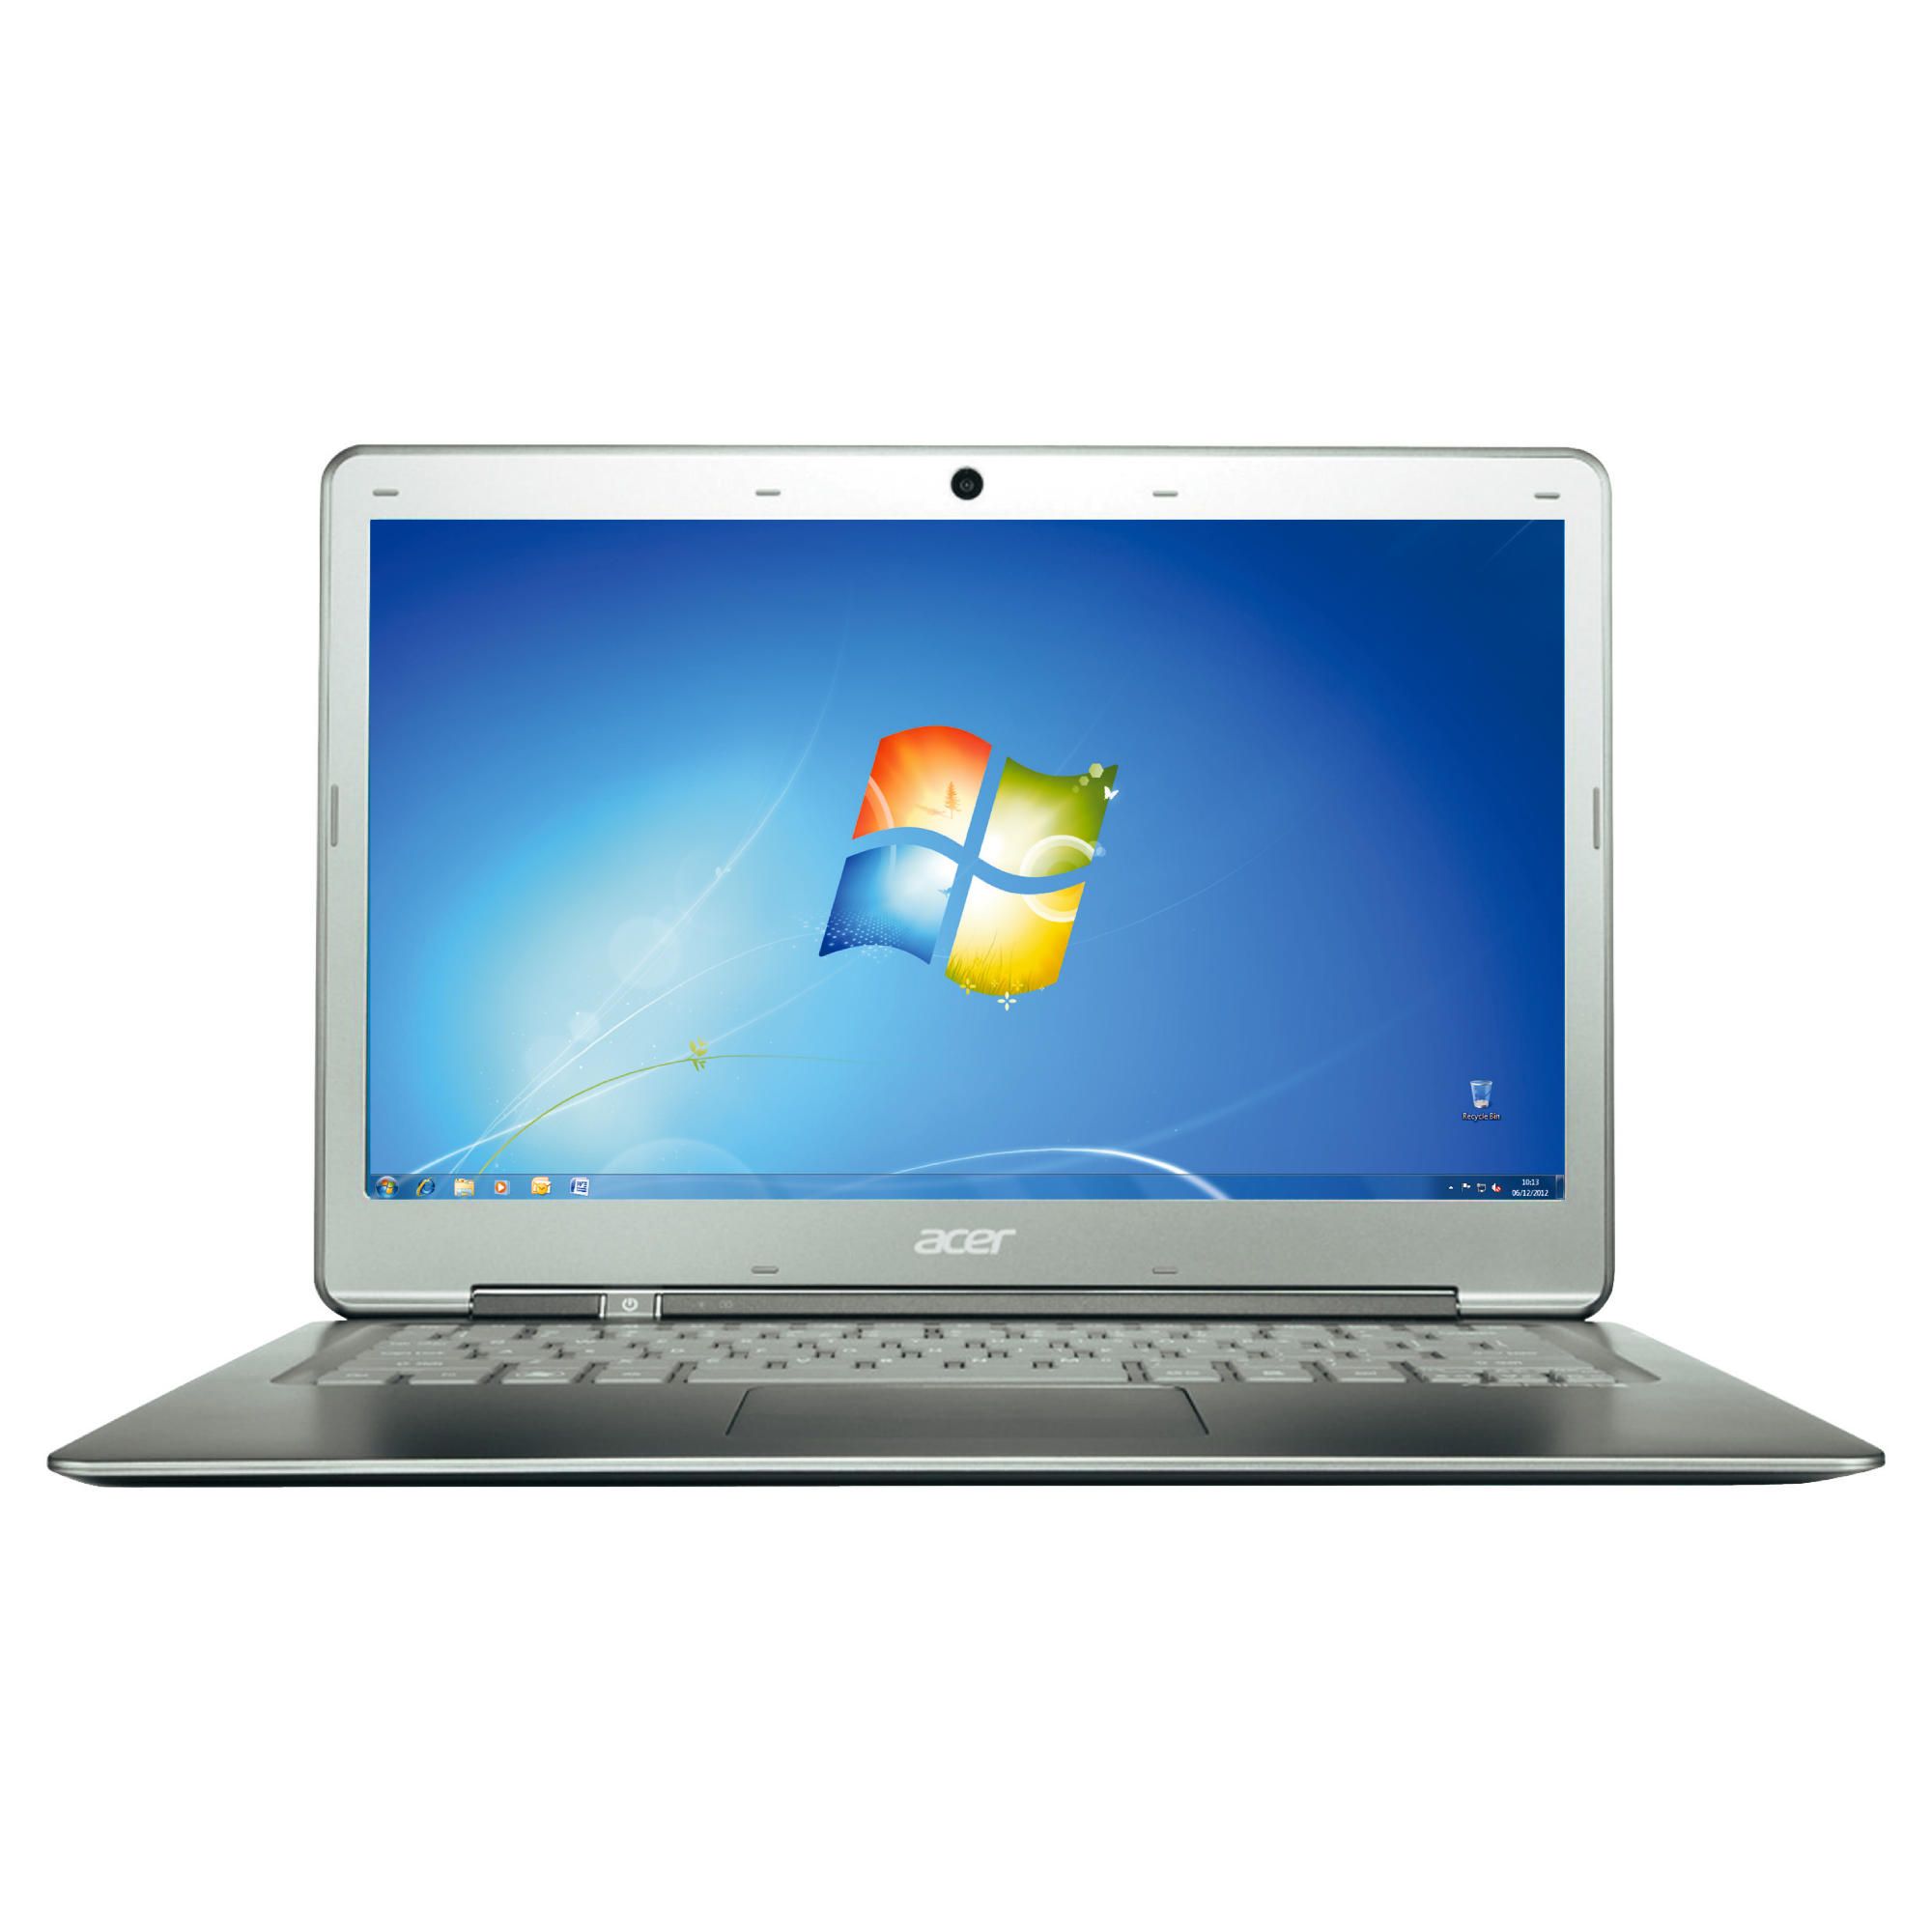 Acer Aspire S3-951 13.3-inch Laptop, Intel Core i5, 4GB RAM, 240GB SSD, Windows 7, Silver